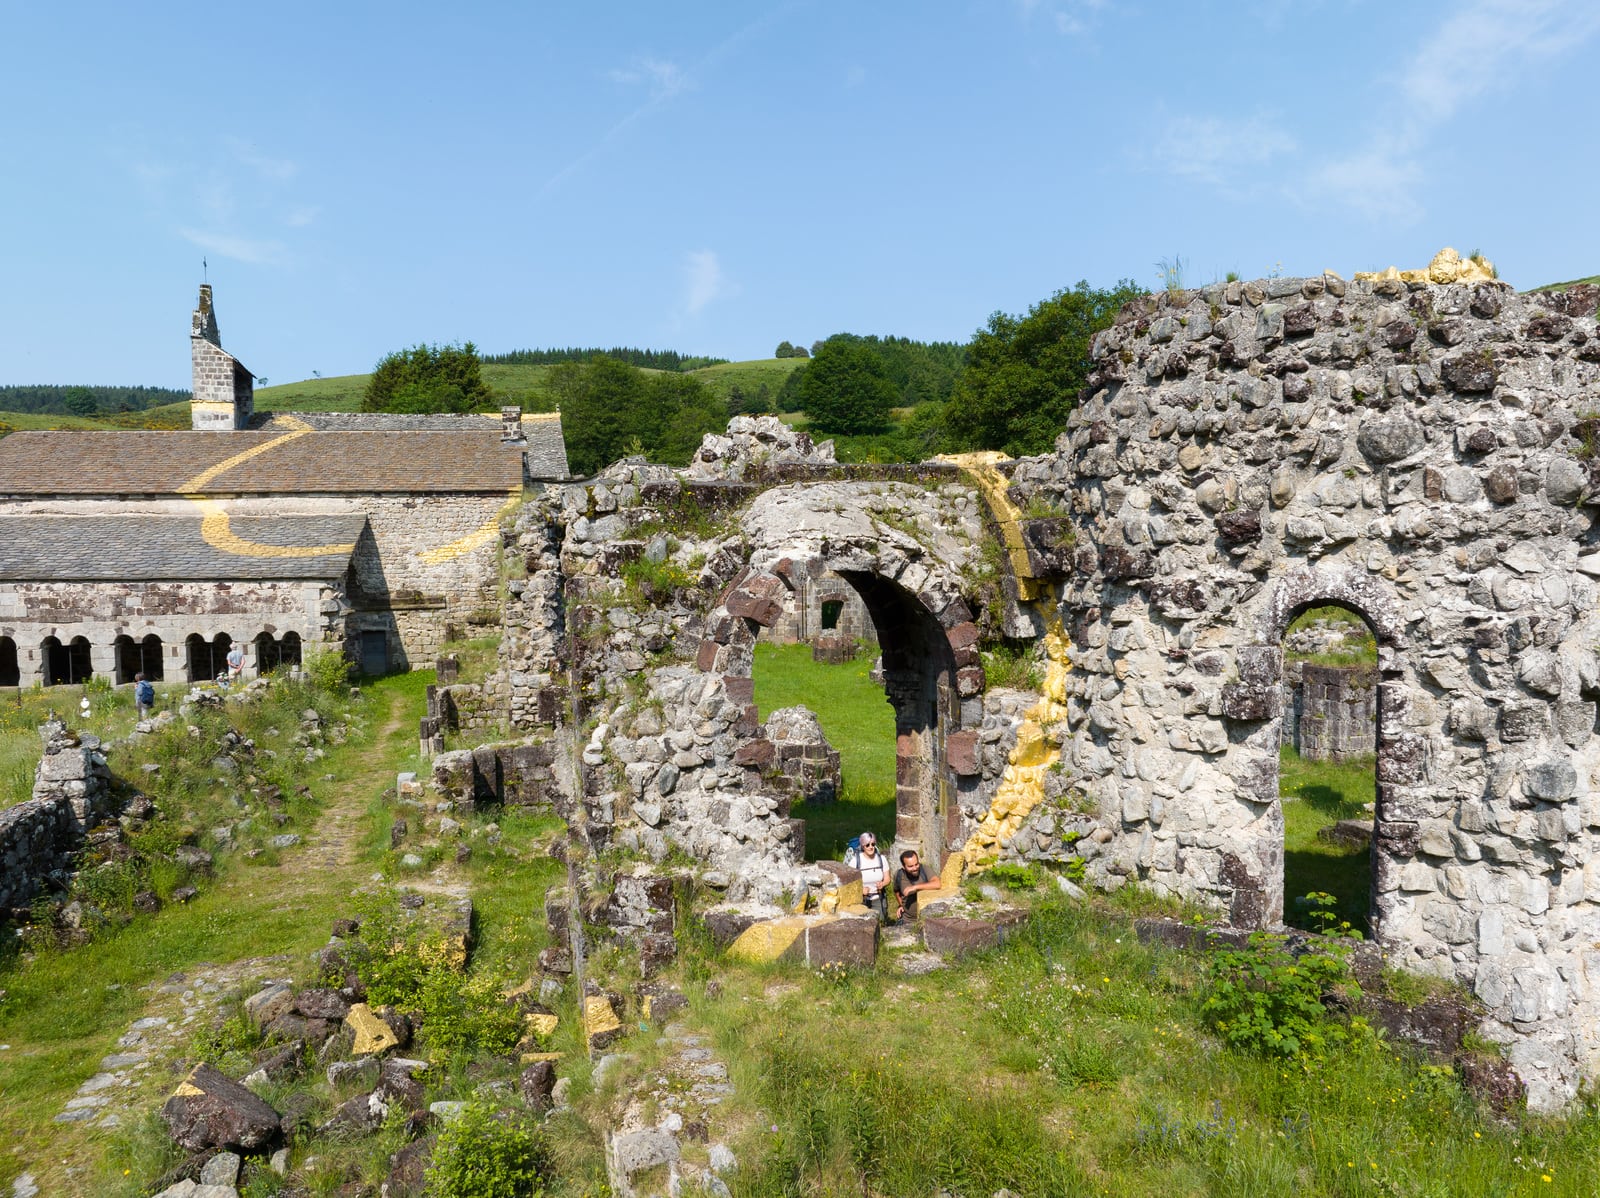 randonneurs dans l'abbaye en ruine